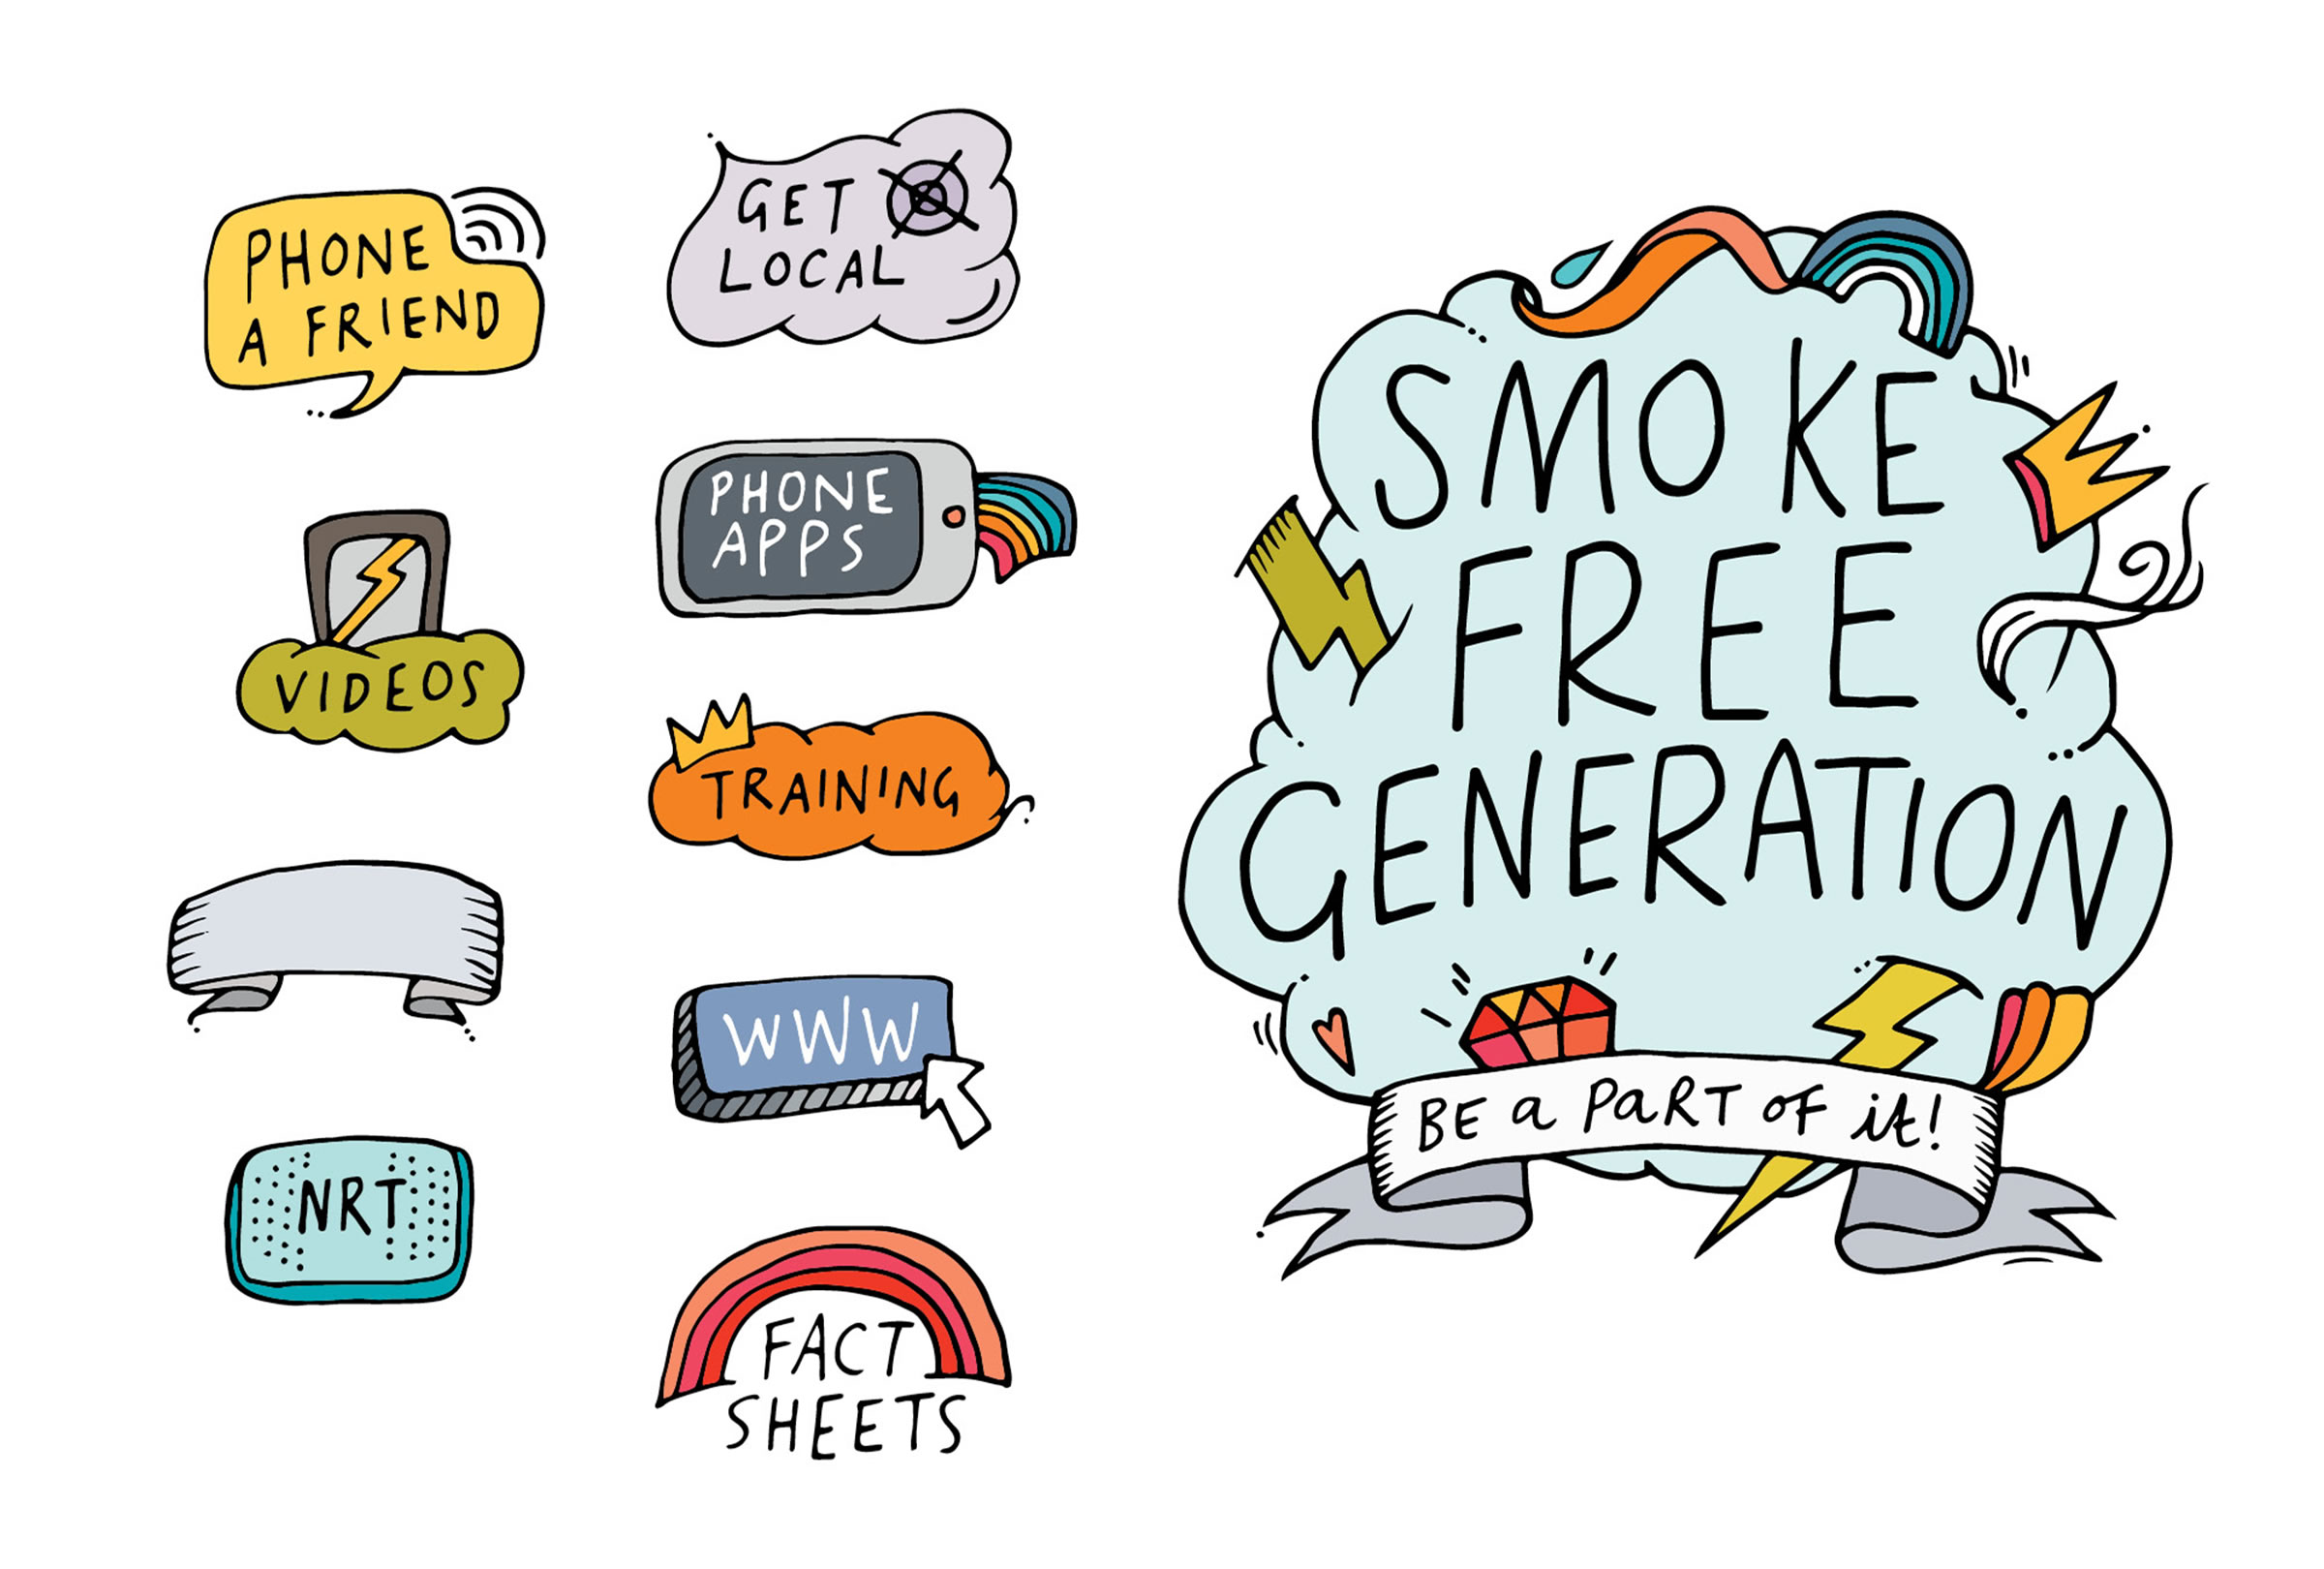 Smoke Free Generation